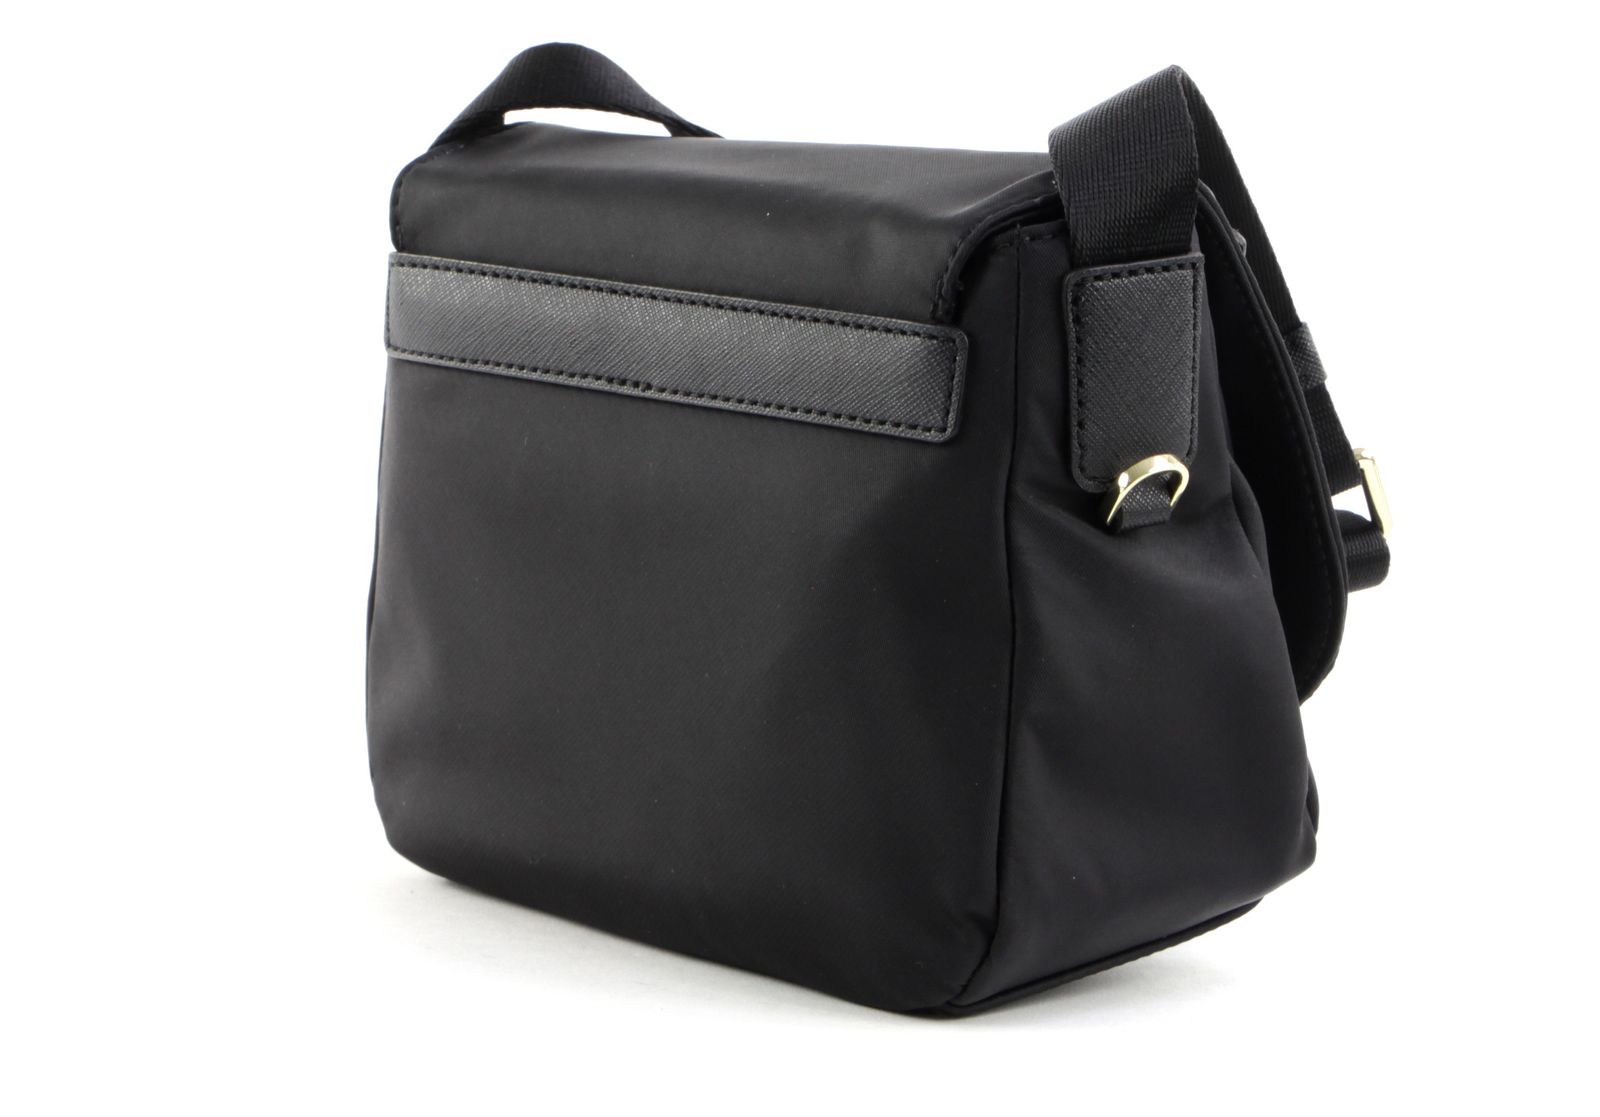 DKNY Cora Flap Crossbody Blk / Gold | Buy bags, purses & accessories ...